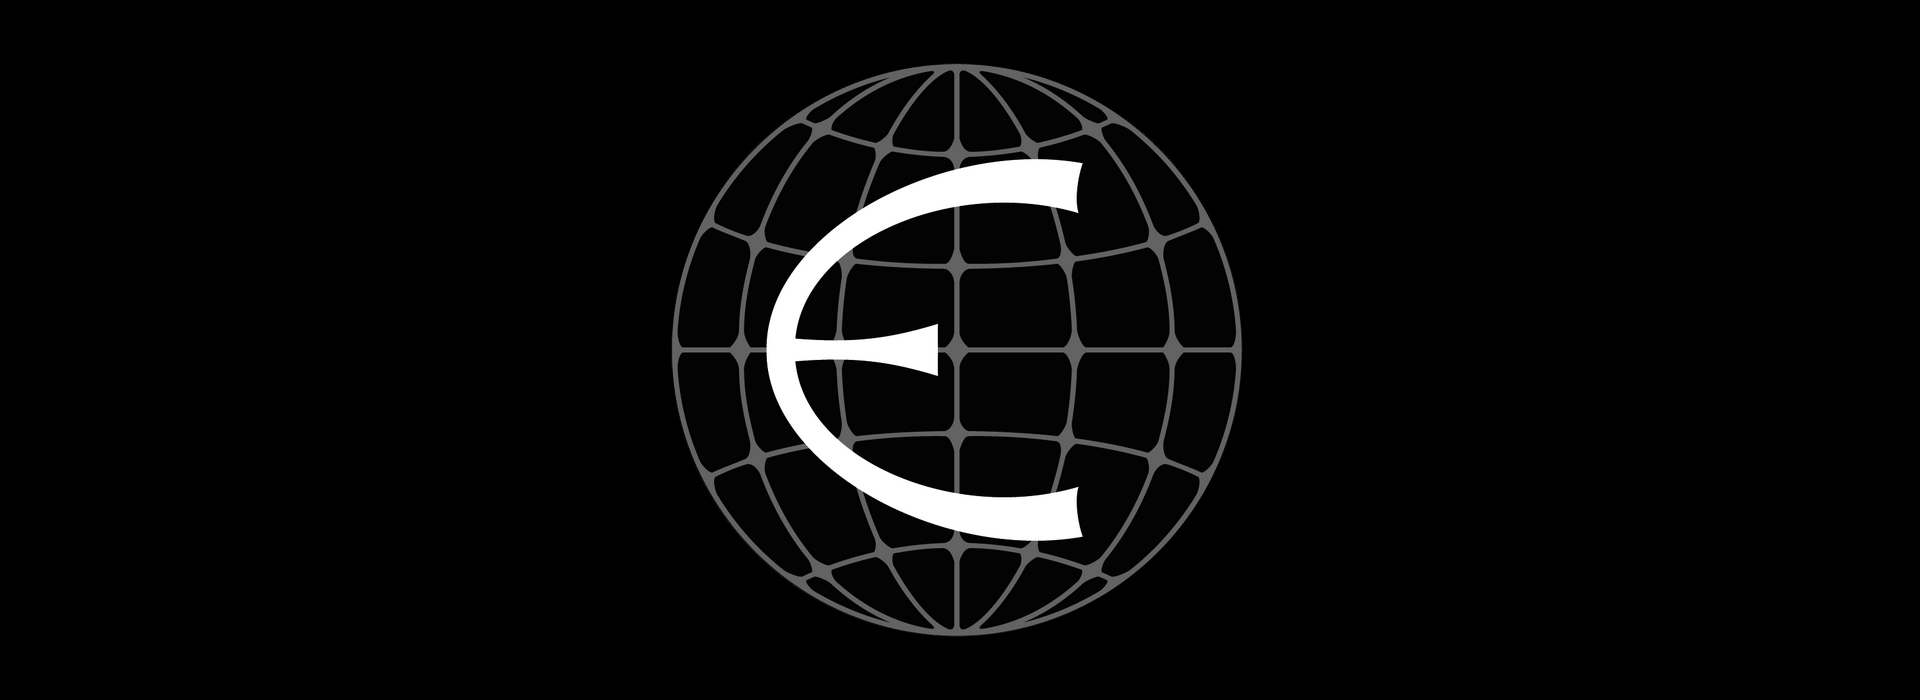 Le logo d'EKIDEN